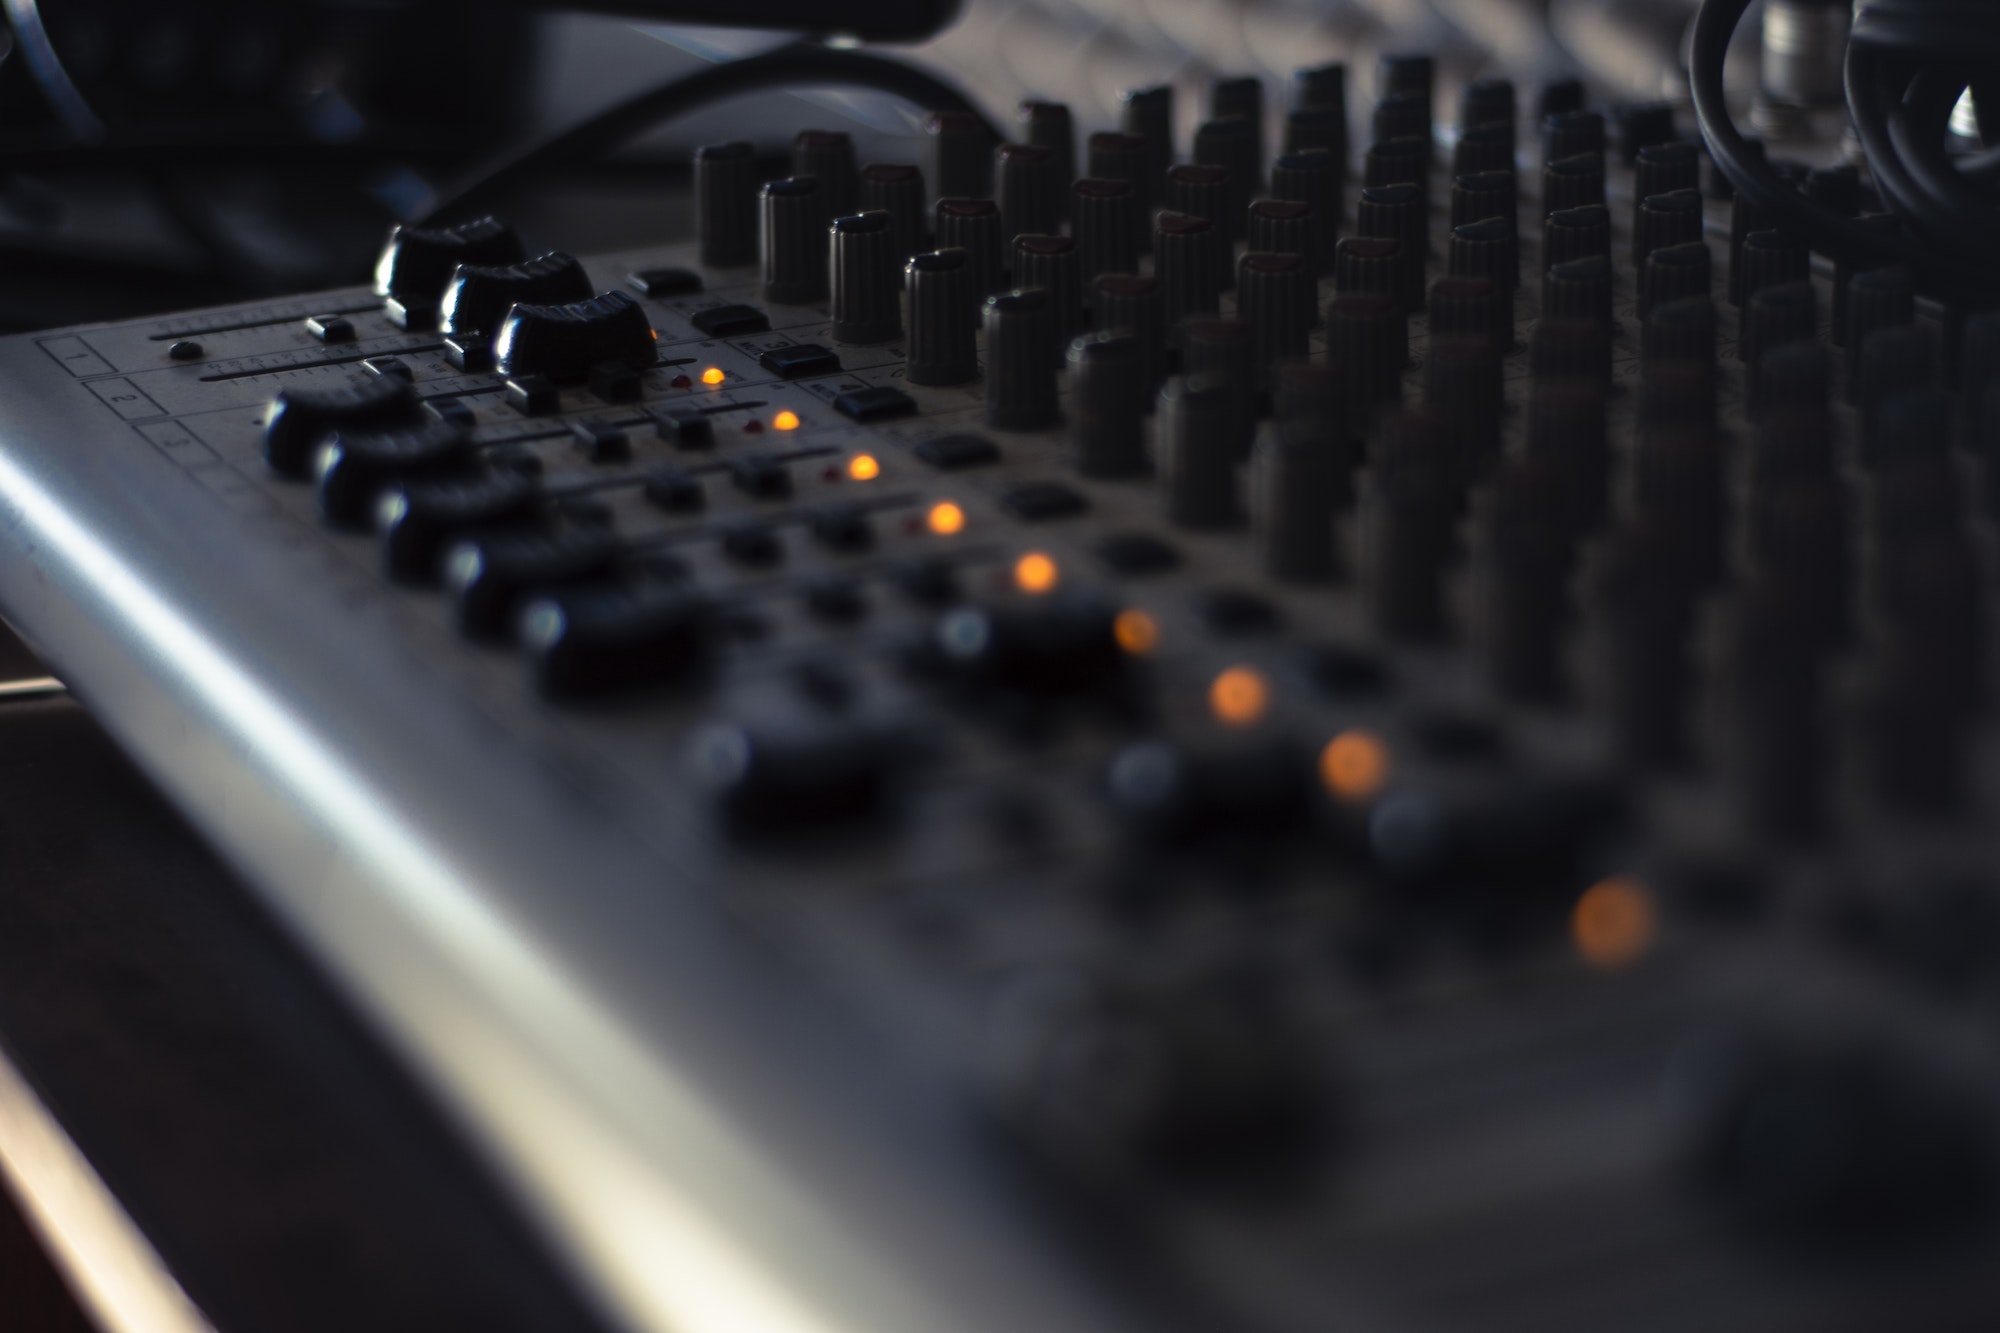 Closeup shot of professional audio mixing equipment in a studio